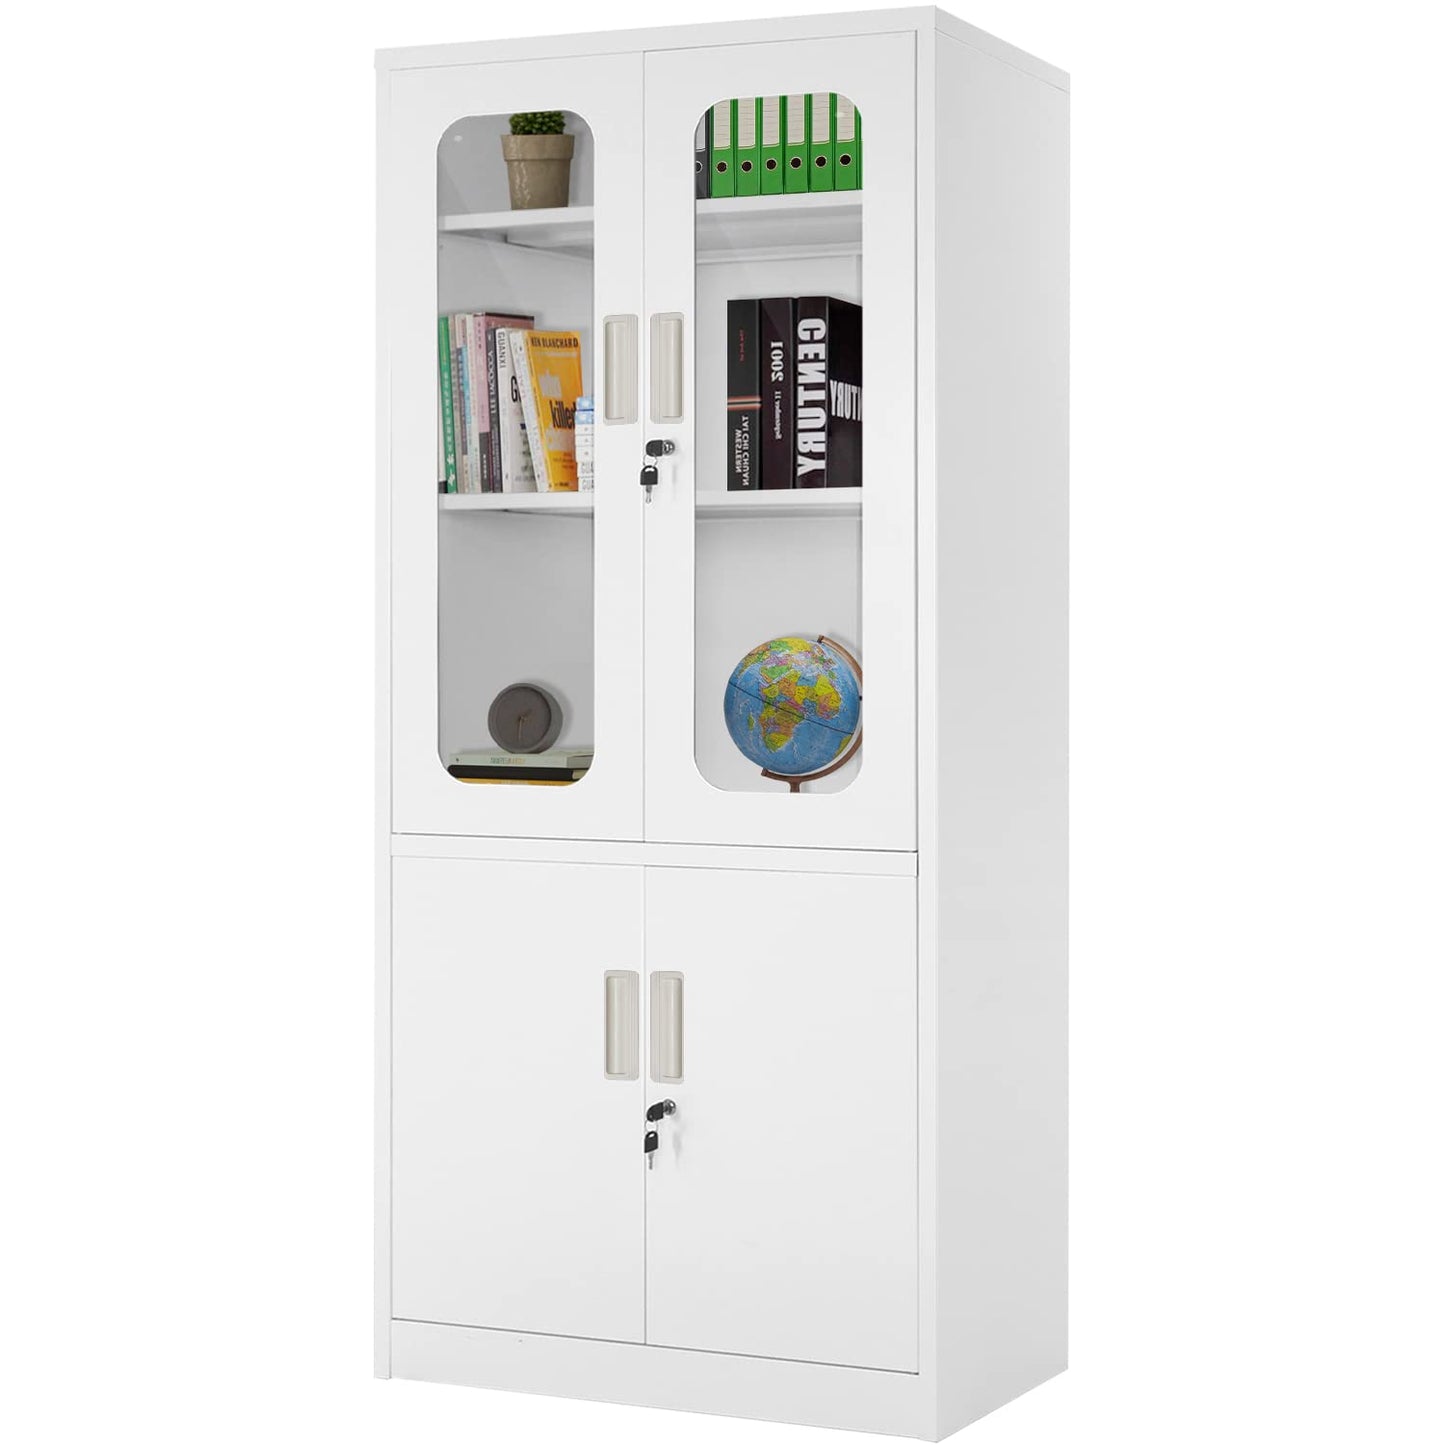 Greenvelly Metal Storage Cabinet with Lock, White Tall Office Storage Cabinet with 2 Glass Doors and Adjustable Shelves, Steel File Storage Cabinet